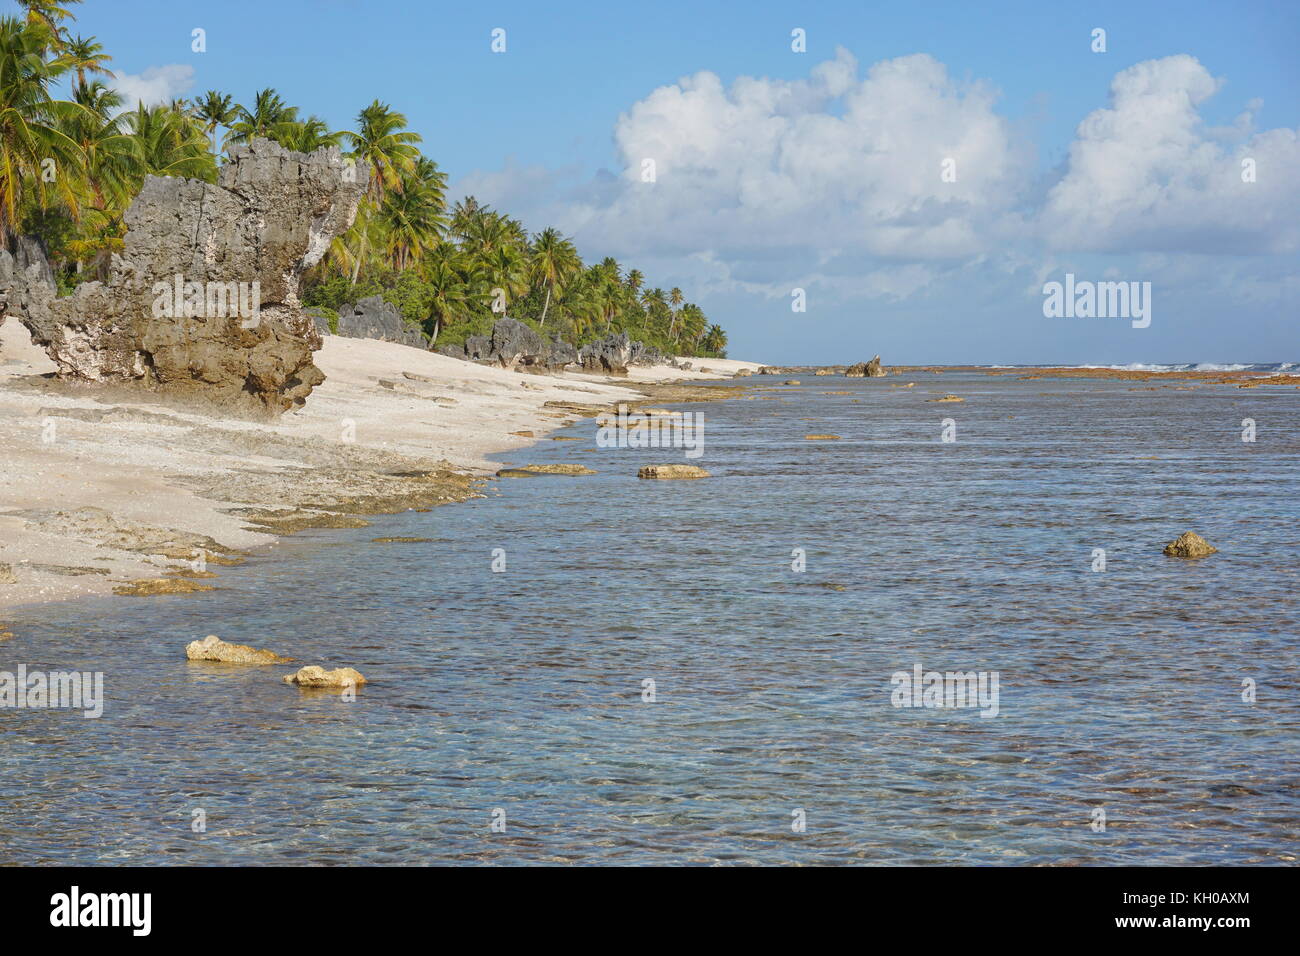 Eroded rocks and coconut palm trees on the seashore of the atoll of Tikehau, Tuamotus, French Polynesia, south Pacific ocean Stock Photo